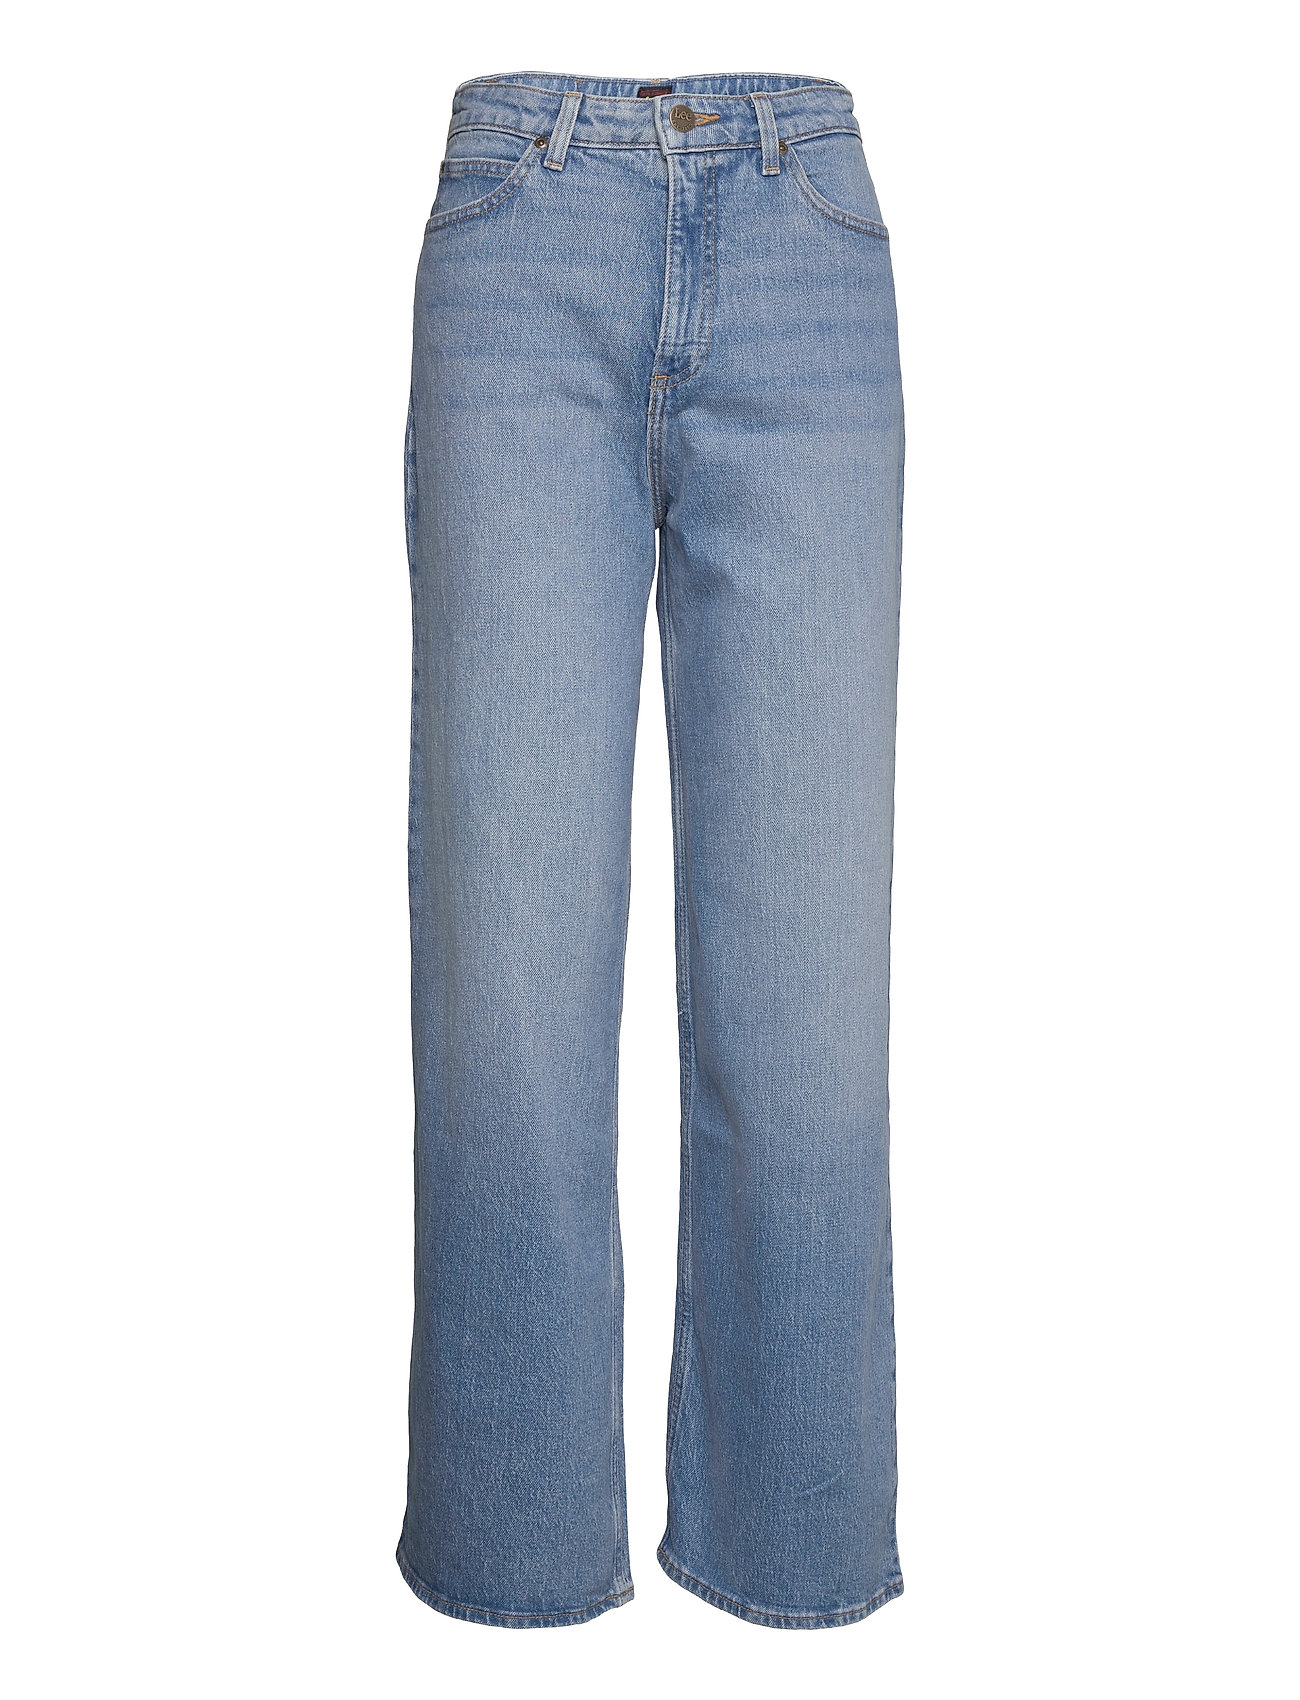 Lee Jeans Wide Leg Long (Mid Harper), €) Large Selection Of Outlet ...